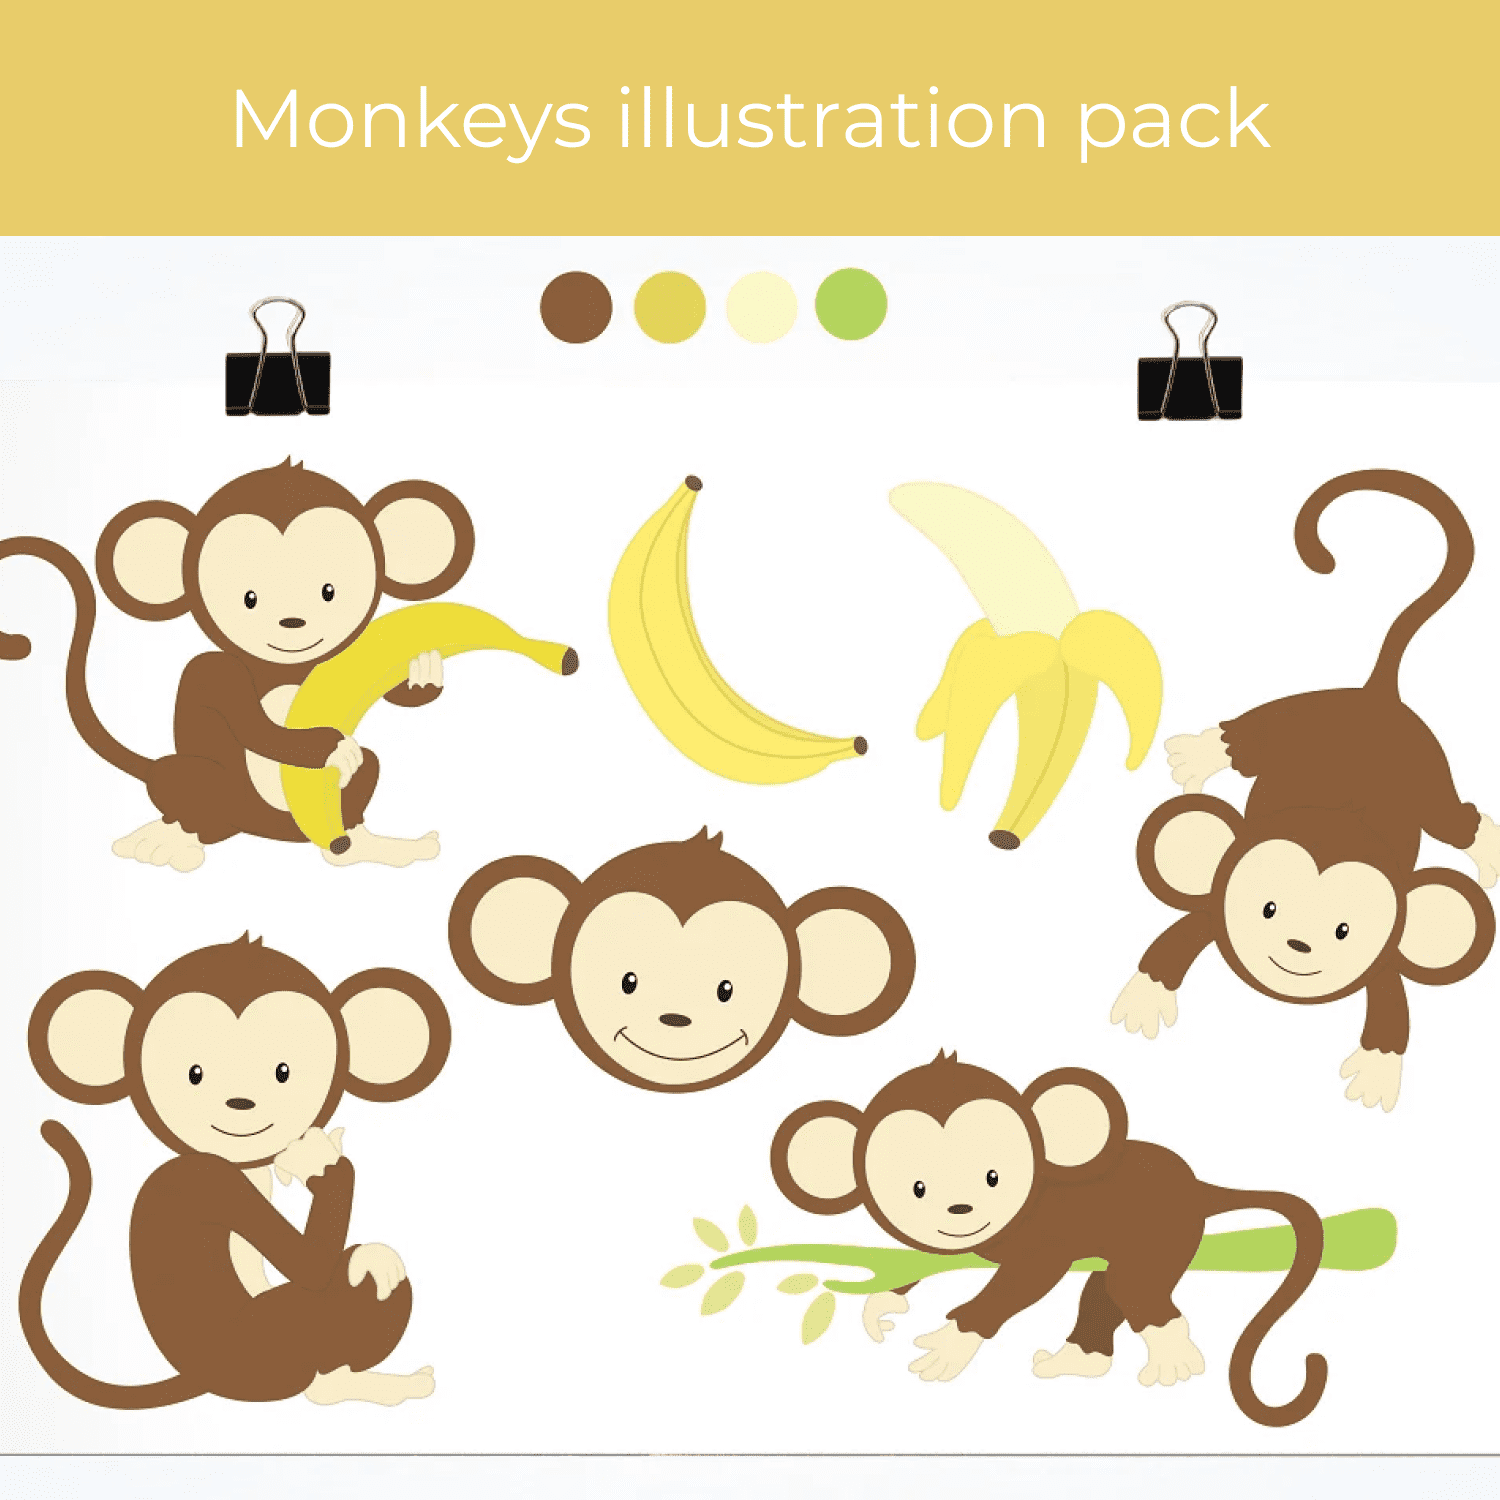 Save Monkeys illustration pack cover.